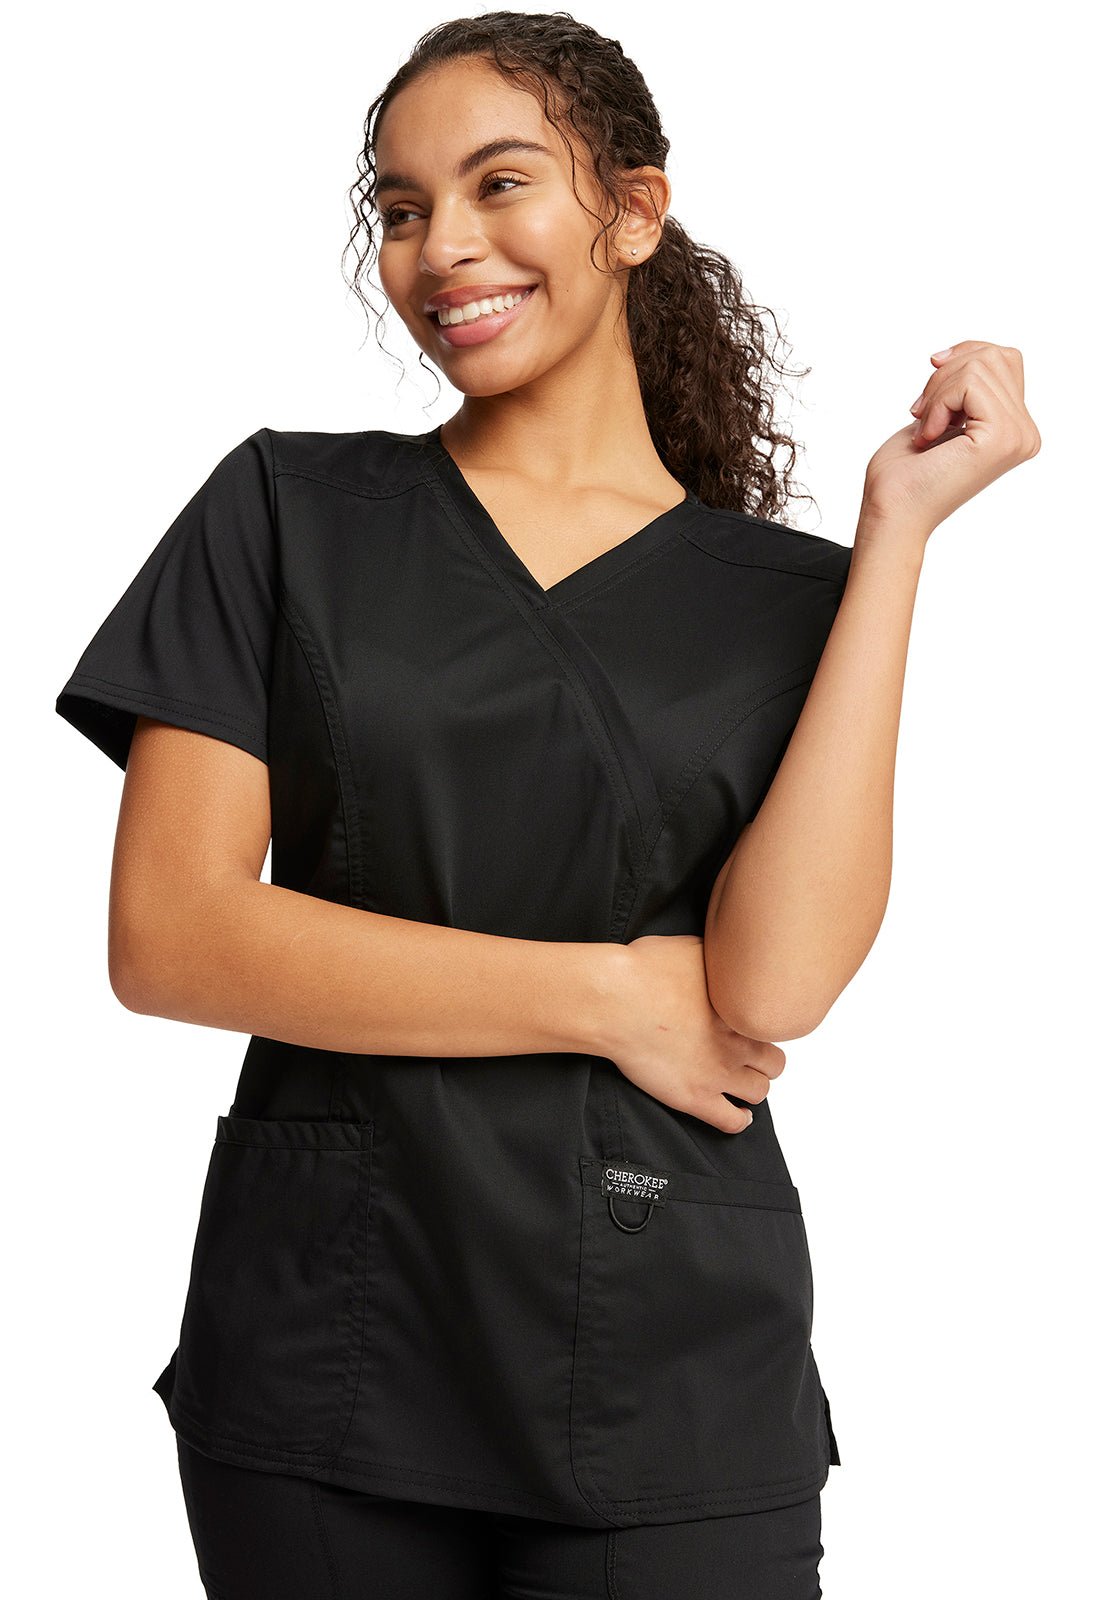 Nurse's Choice: Cherokee Workwear Professionals vs. Infinity Scrubs